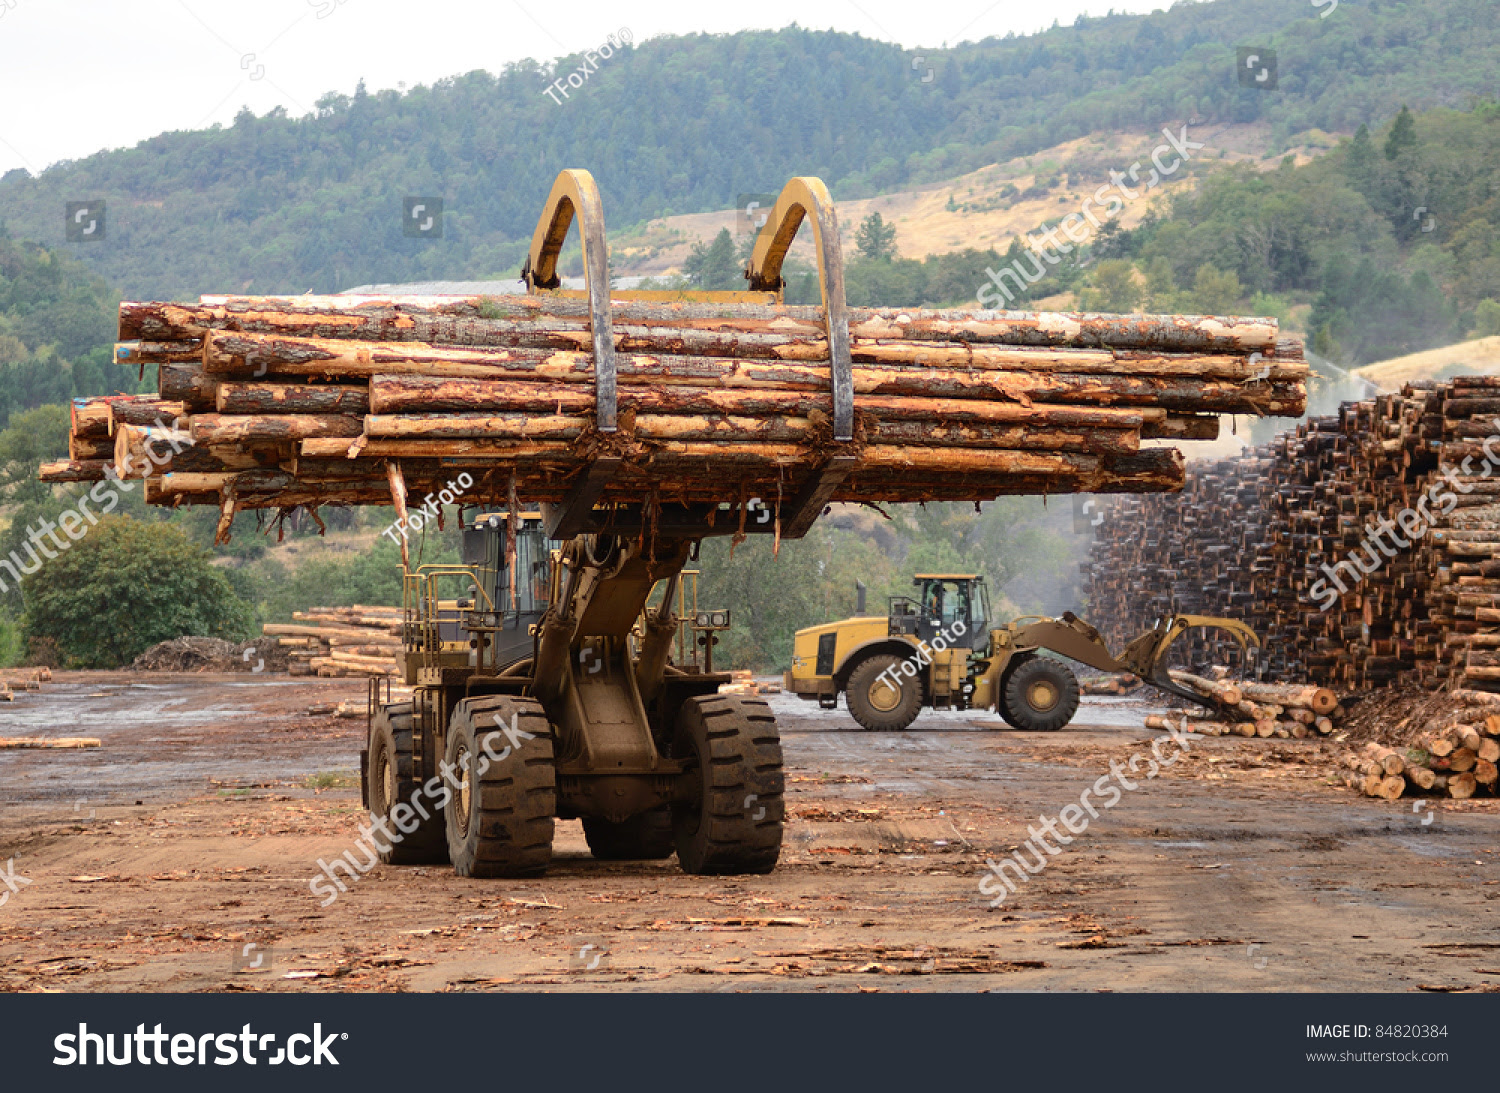 Hardwood Lumber Mills Near Me - ofwoodworking